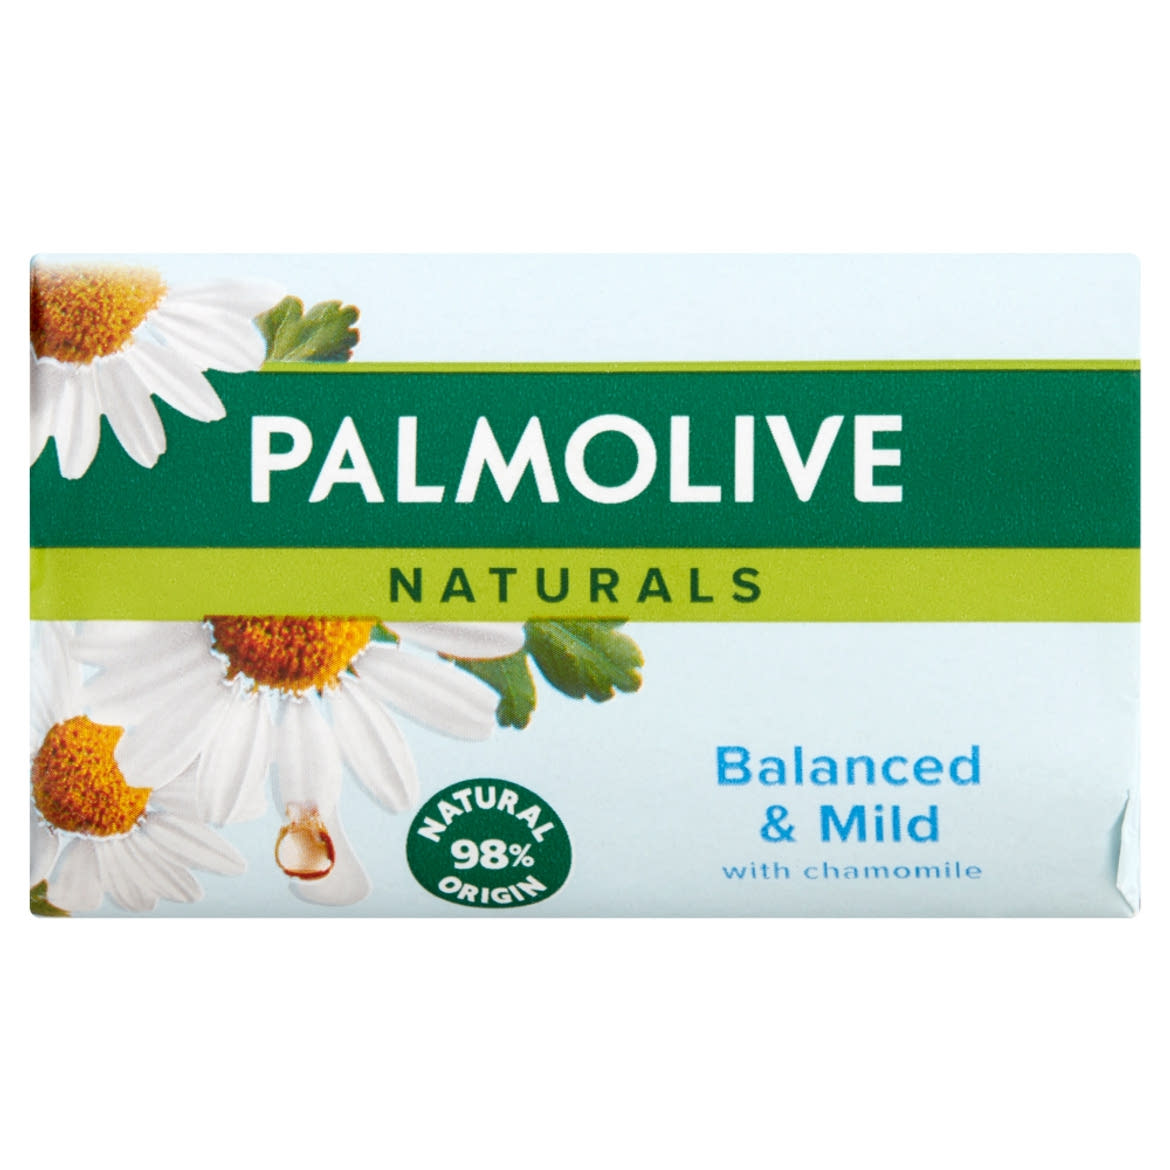 Palmolive Naturals Balanced & Mild pipereszappan